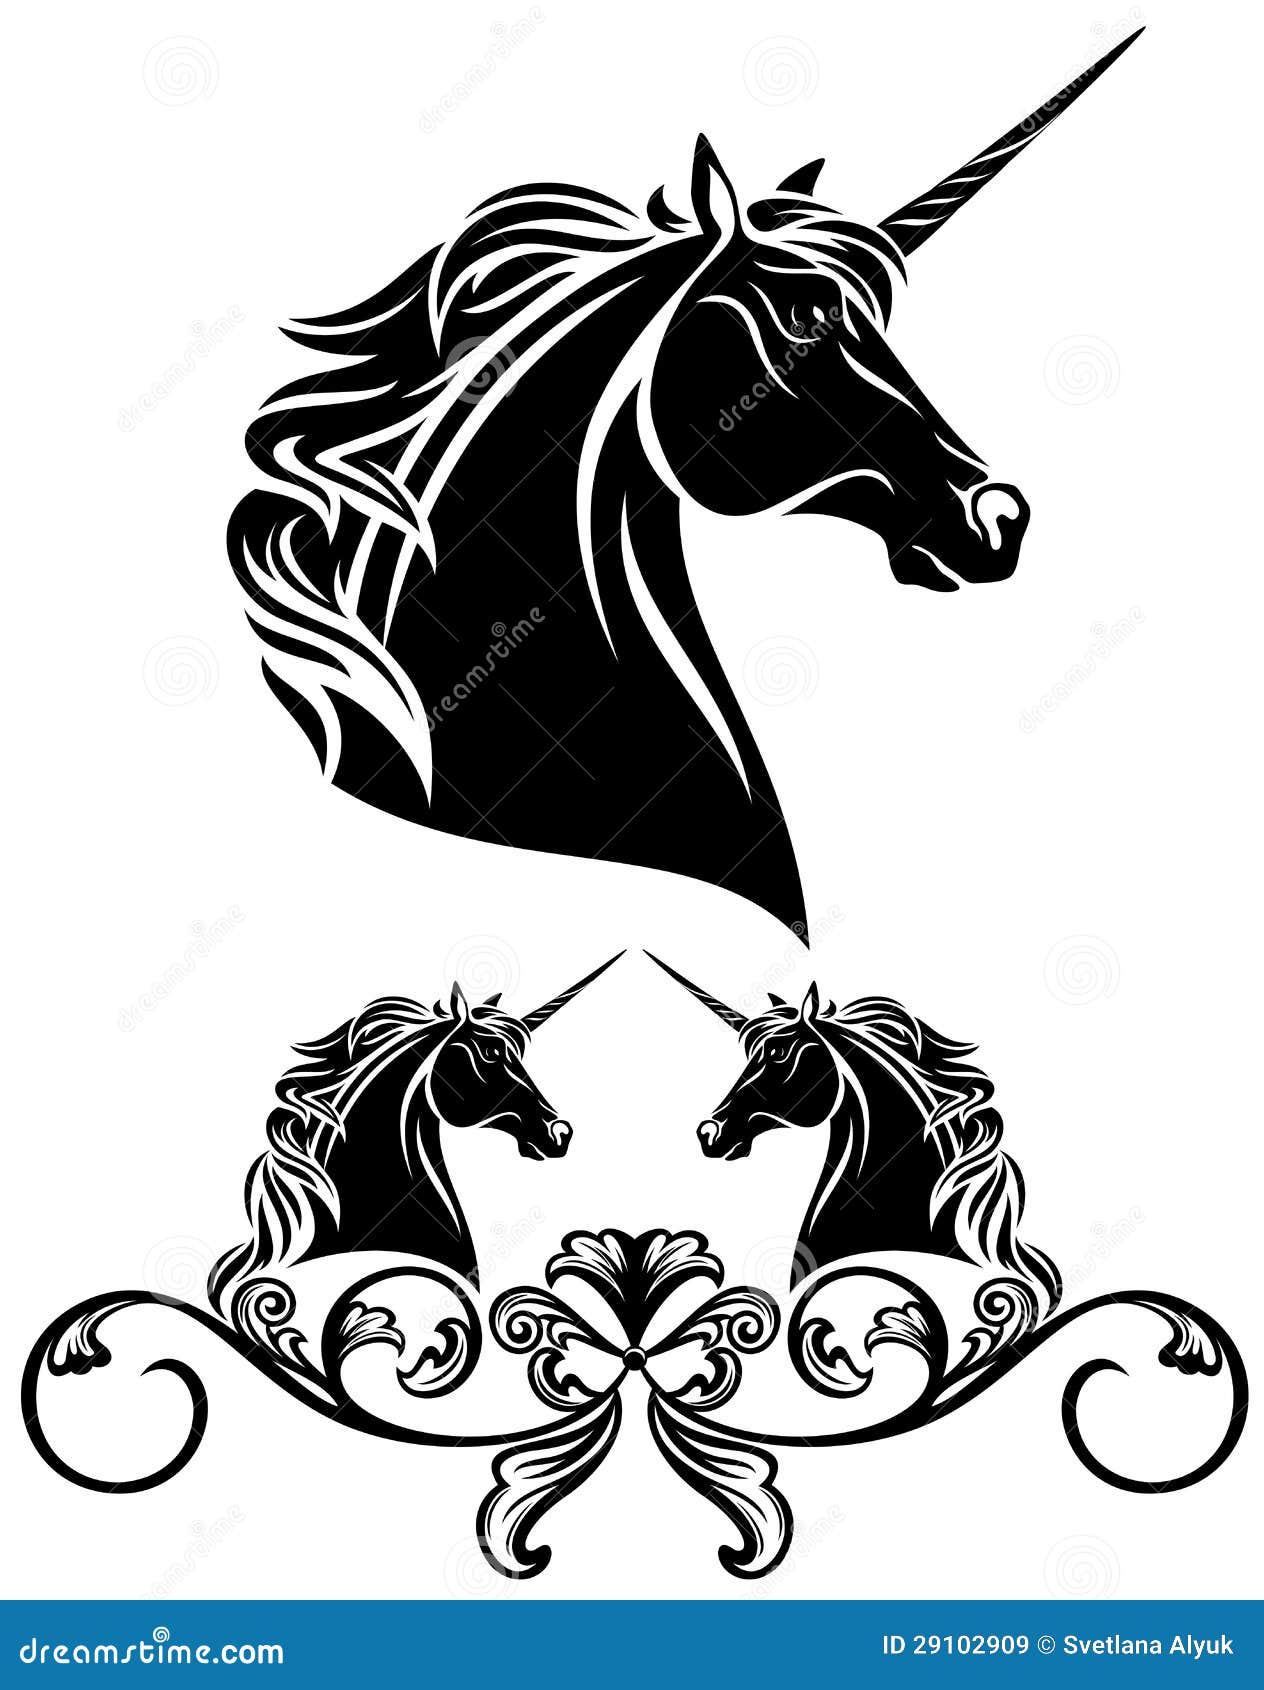 Unicorn design stock vector. Illustration of creature ...